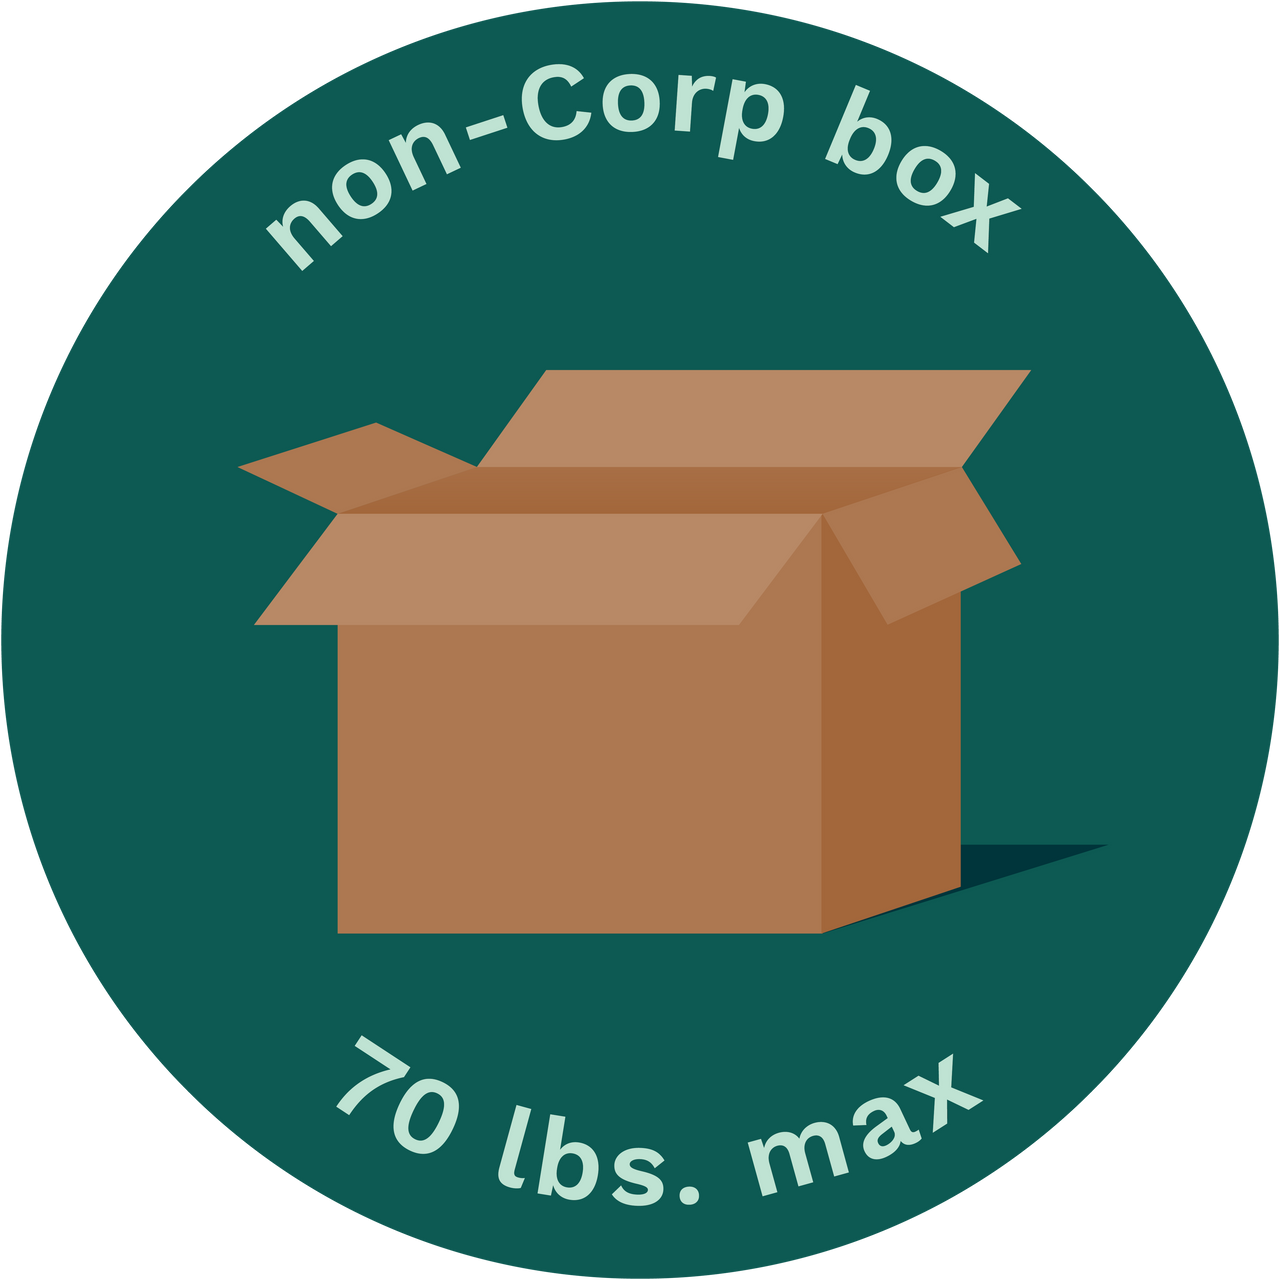 Non-Corp Box